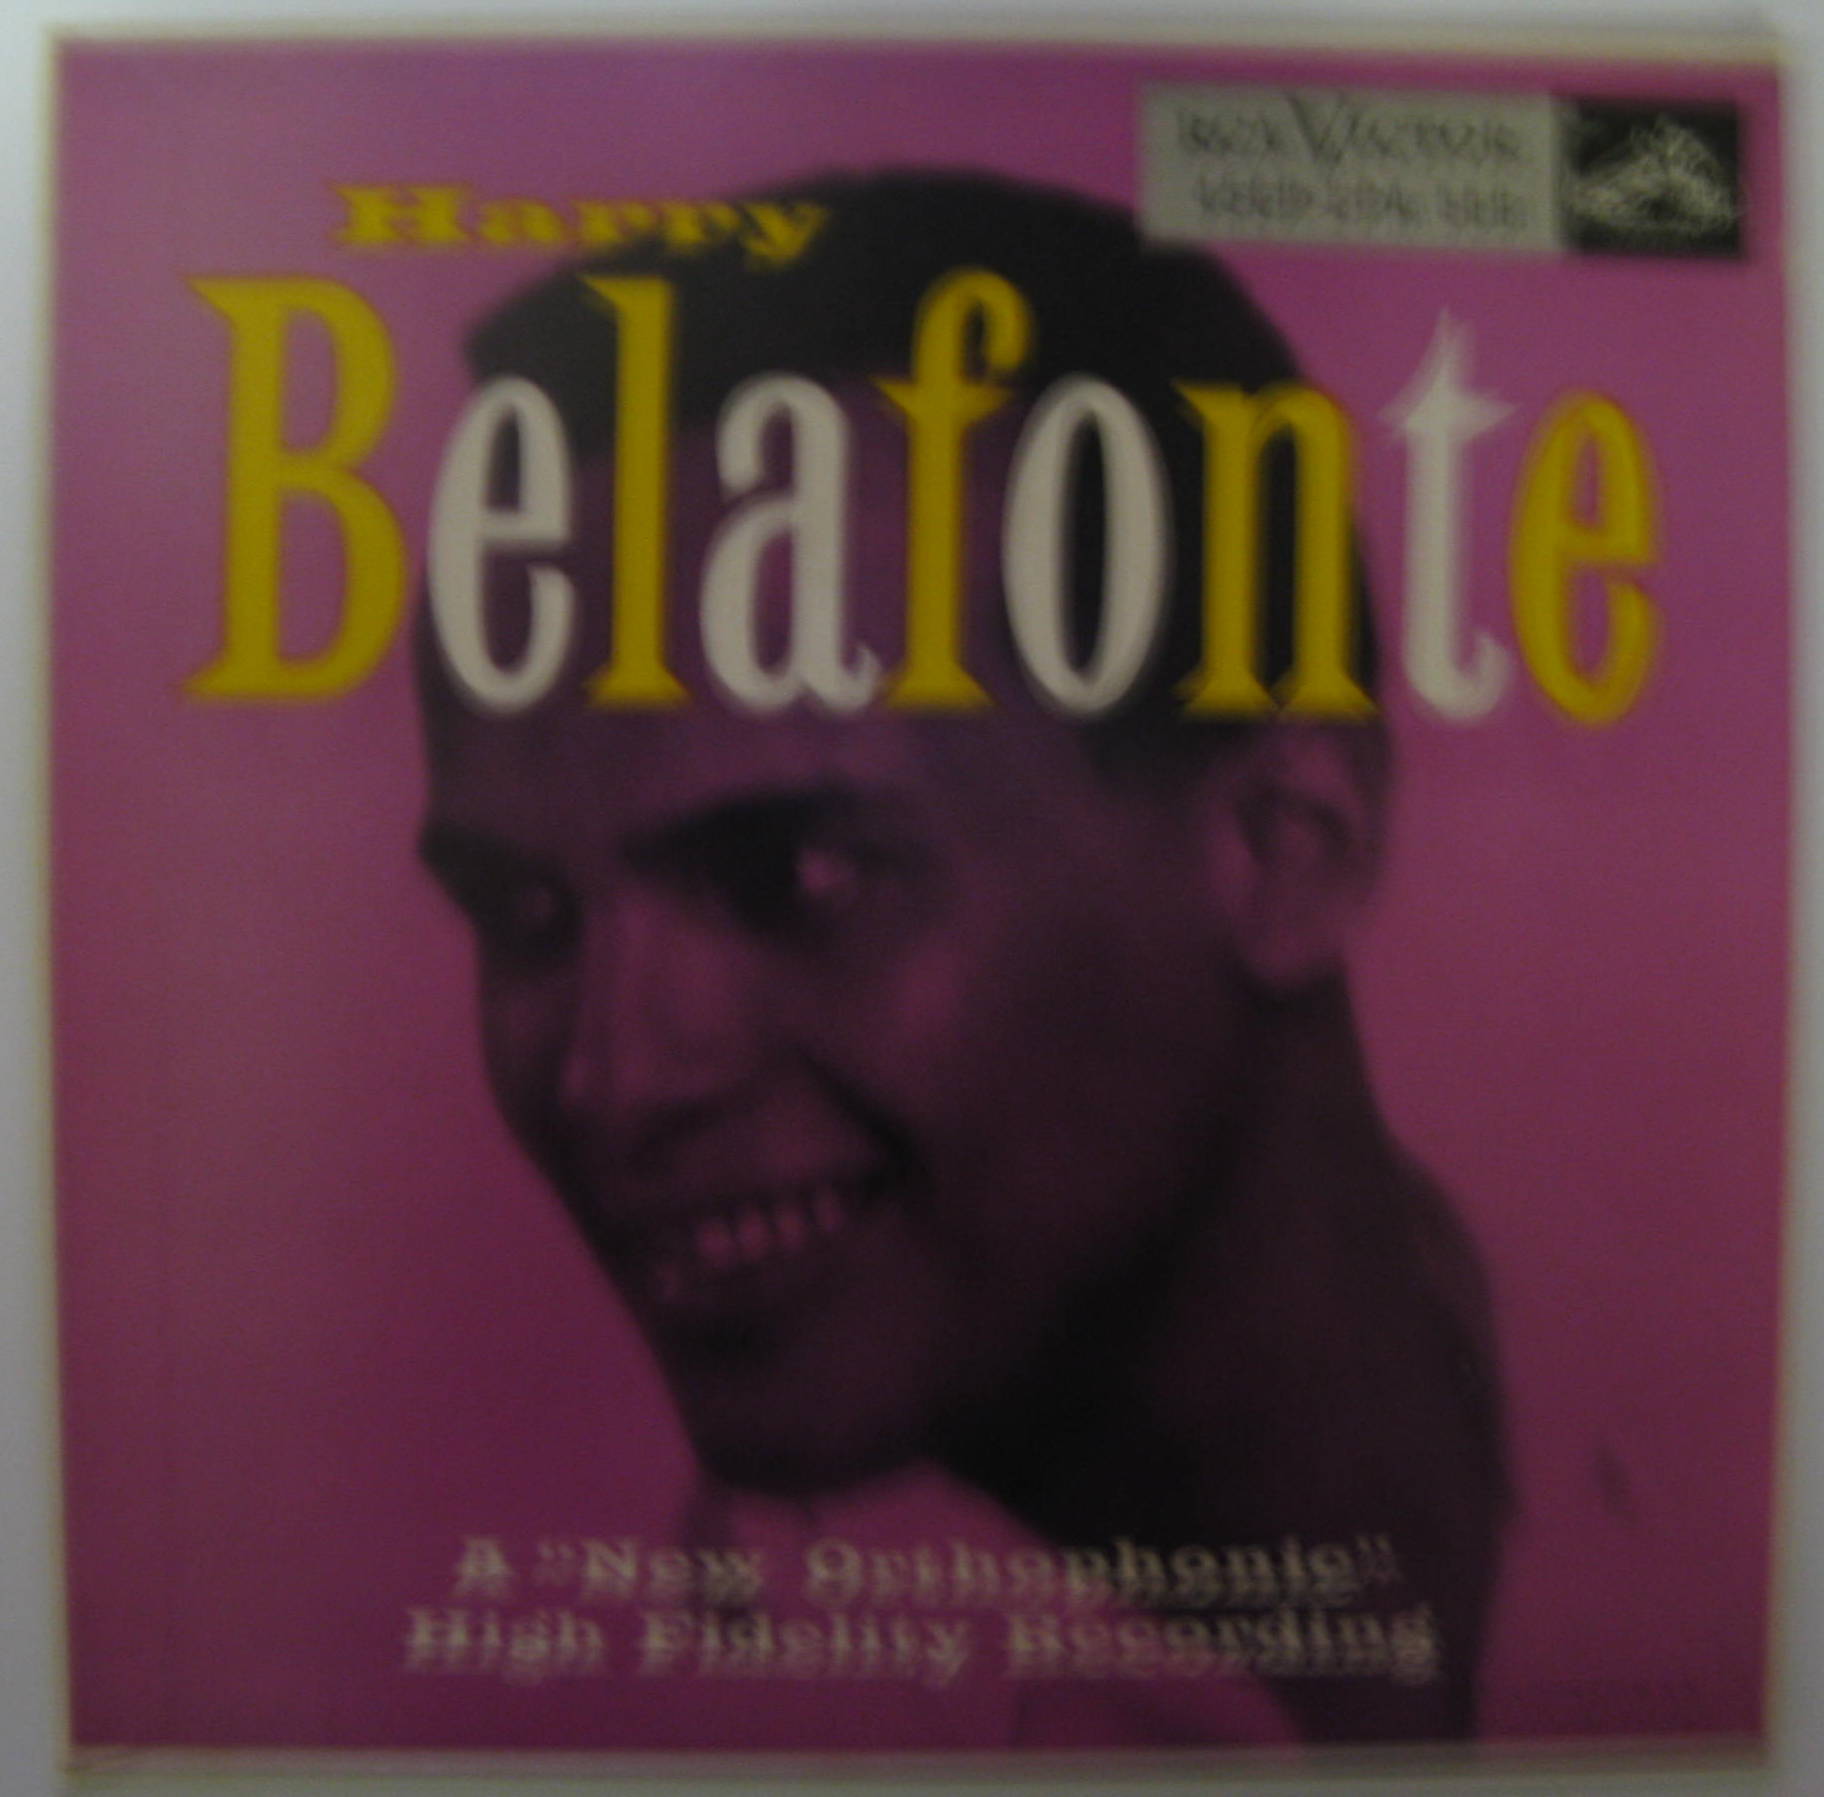 Harry Belafonte / The Delia EP